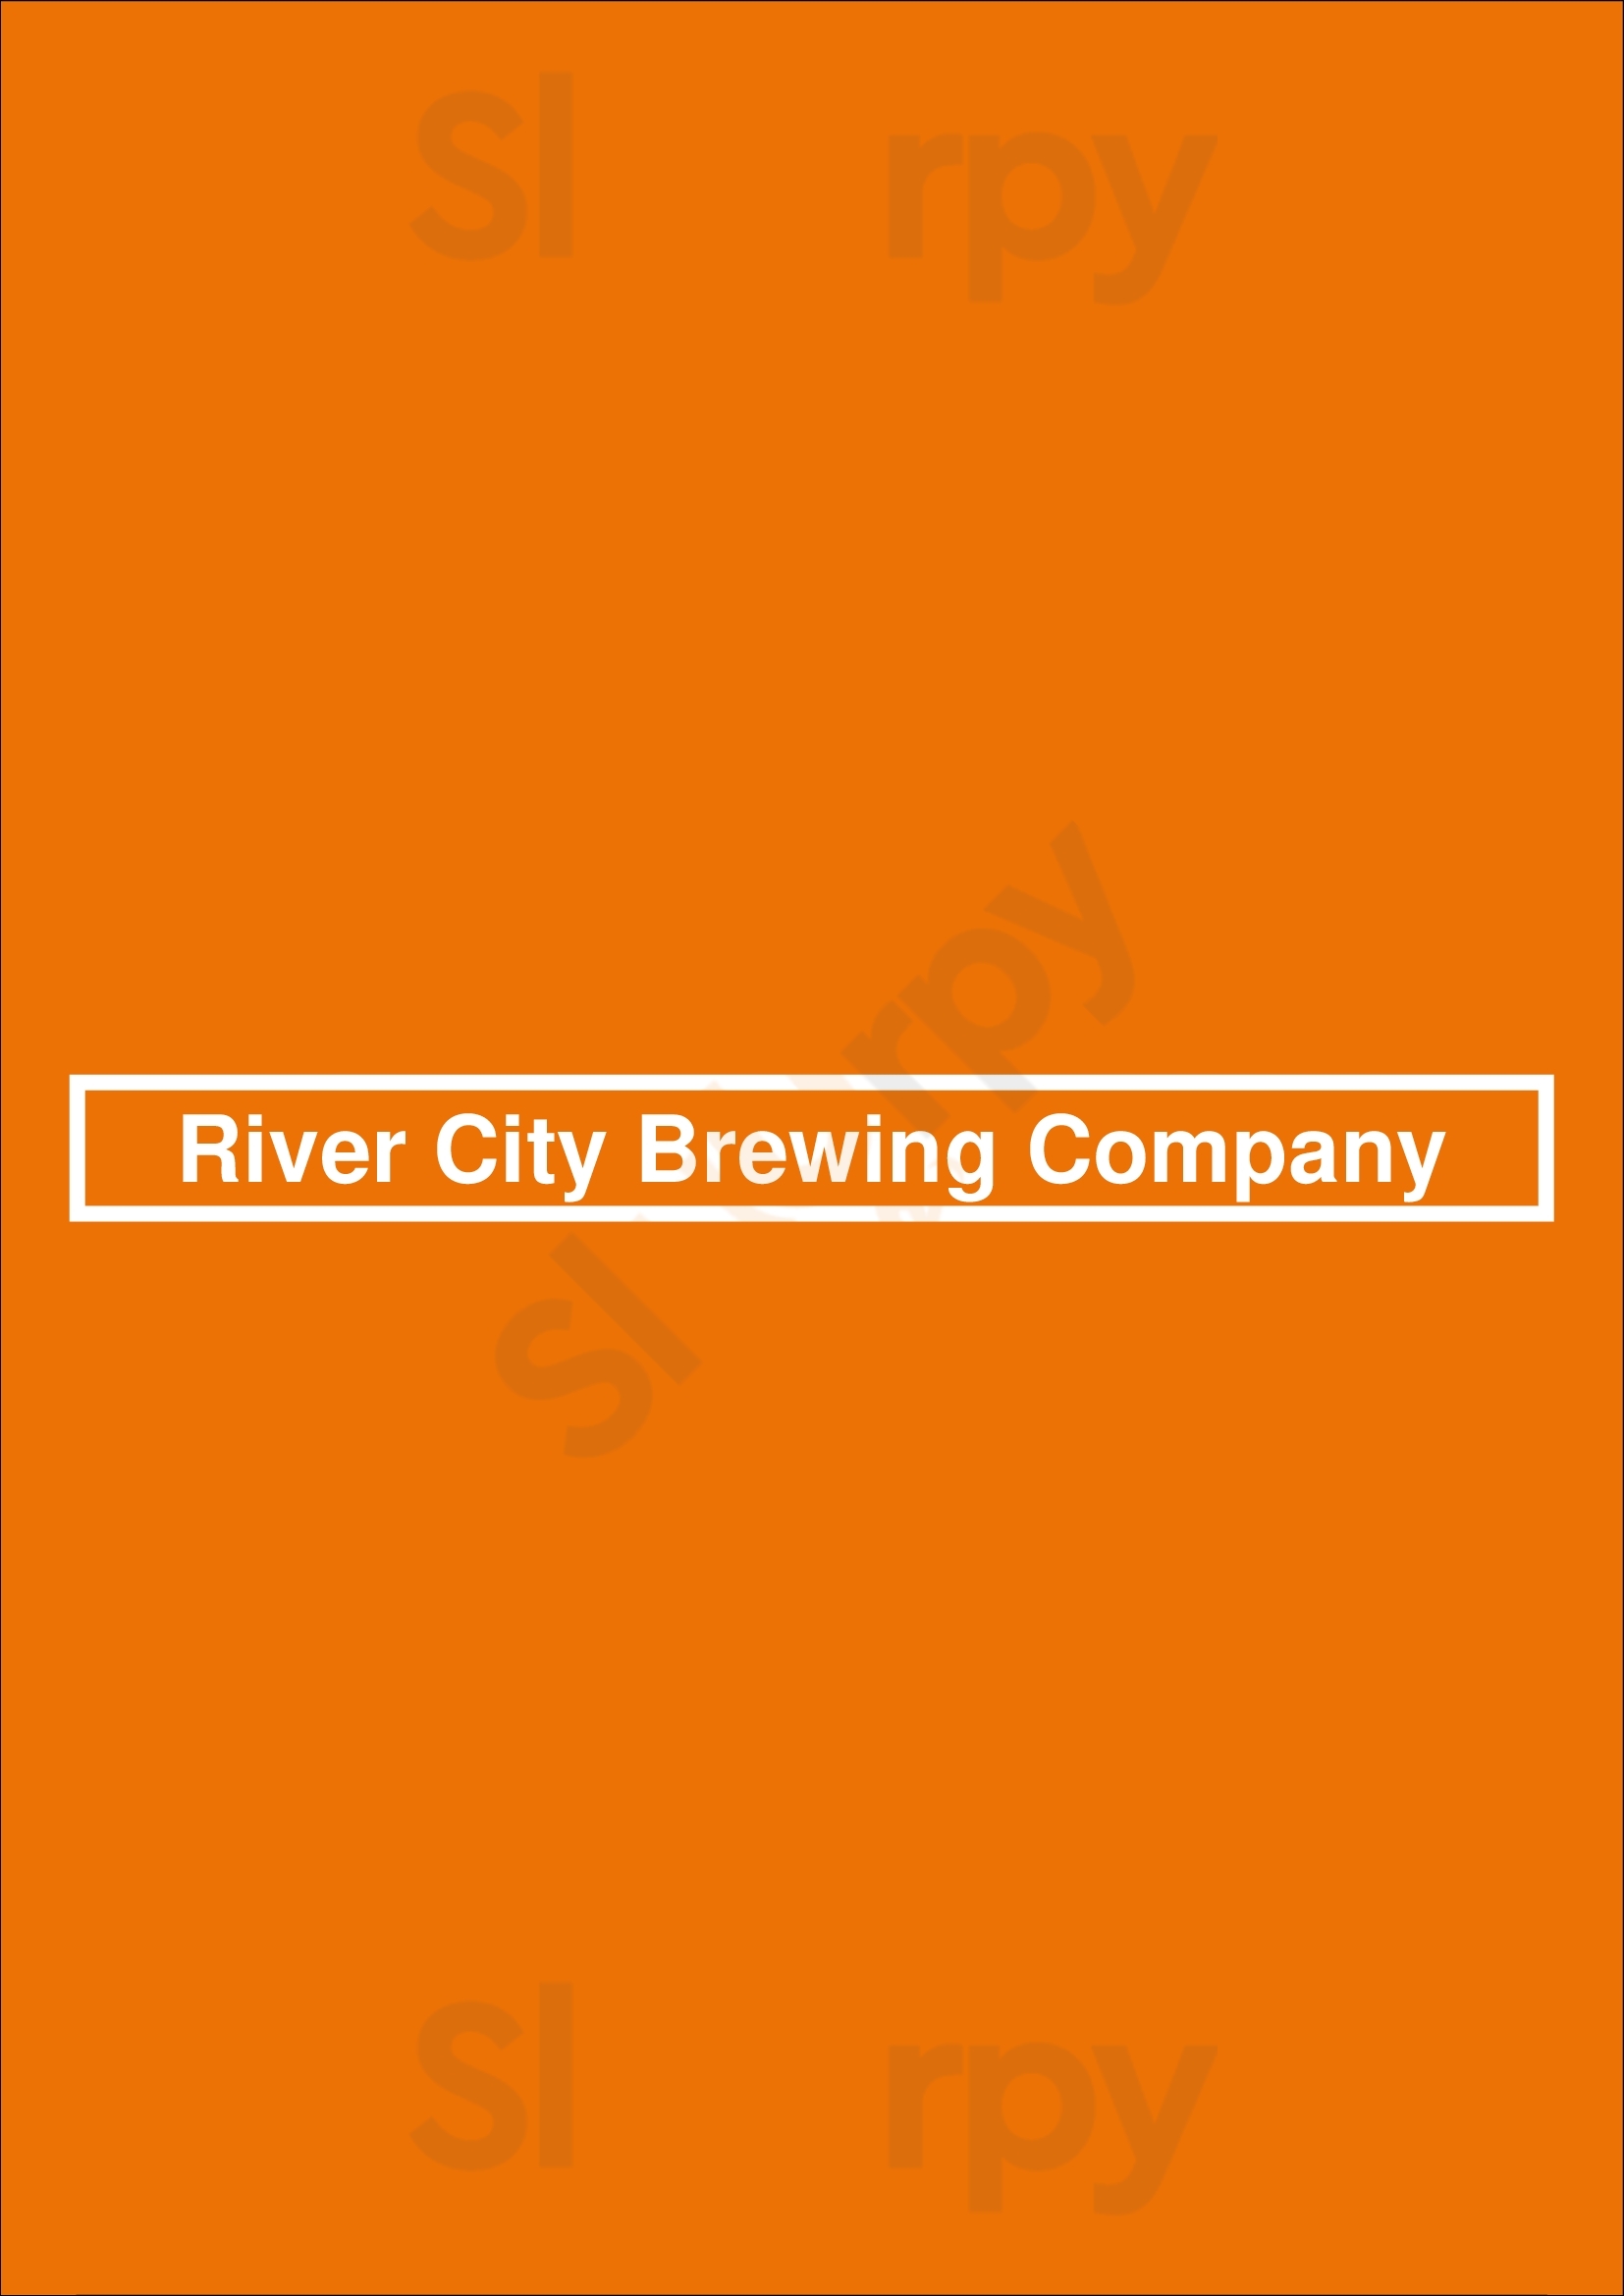 River City Brewing Company Jacksonville Menu - 1